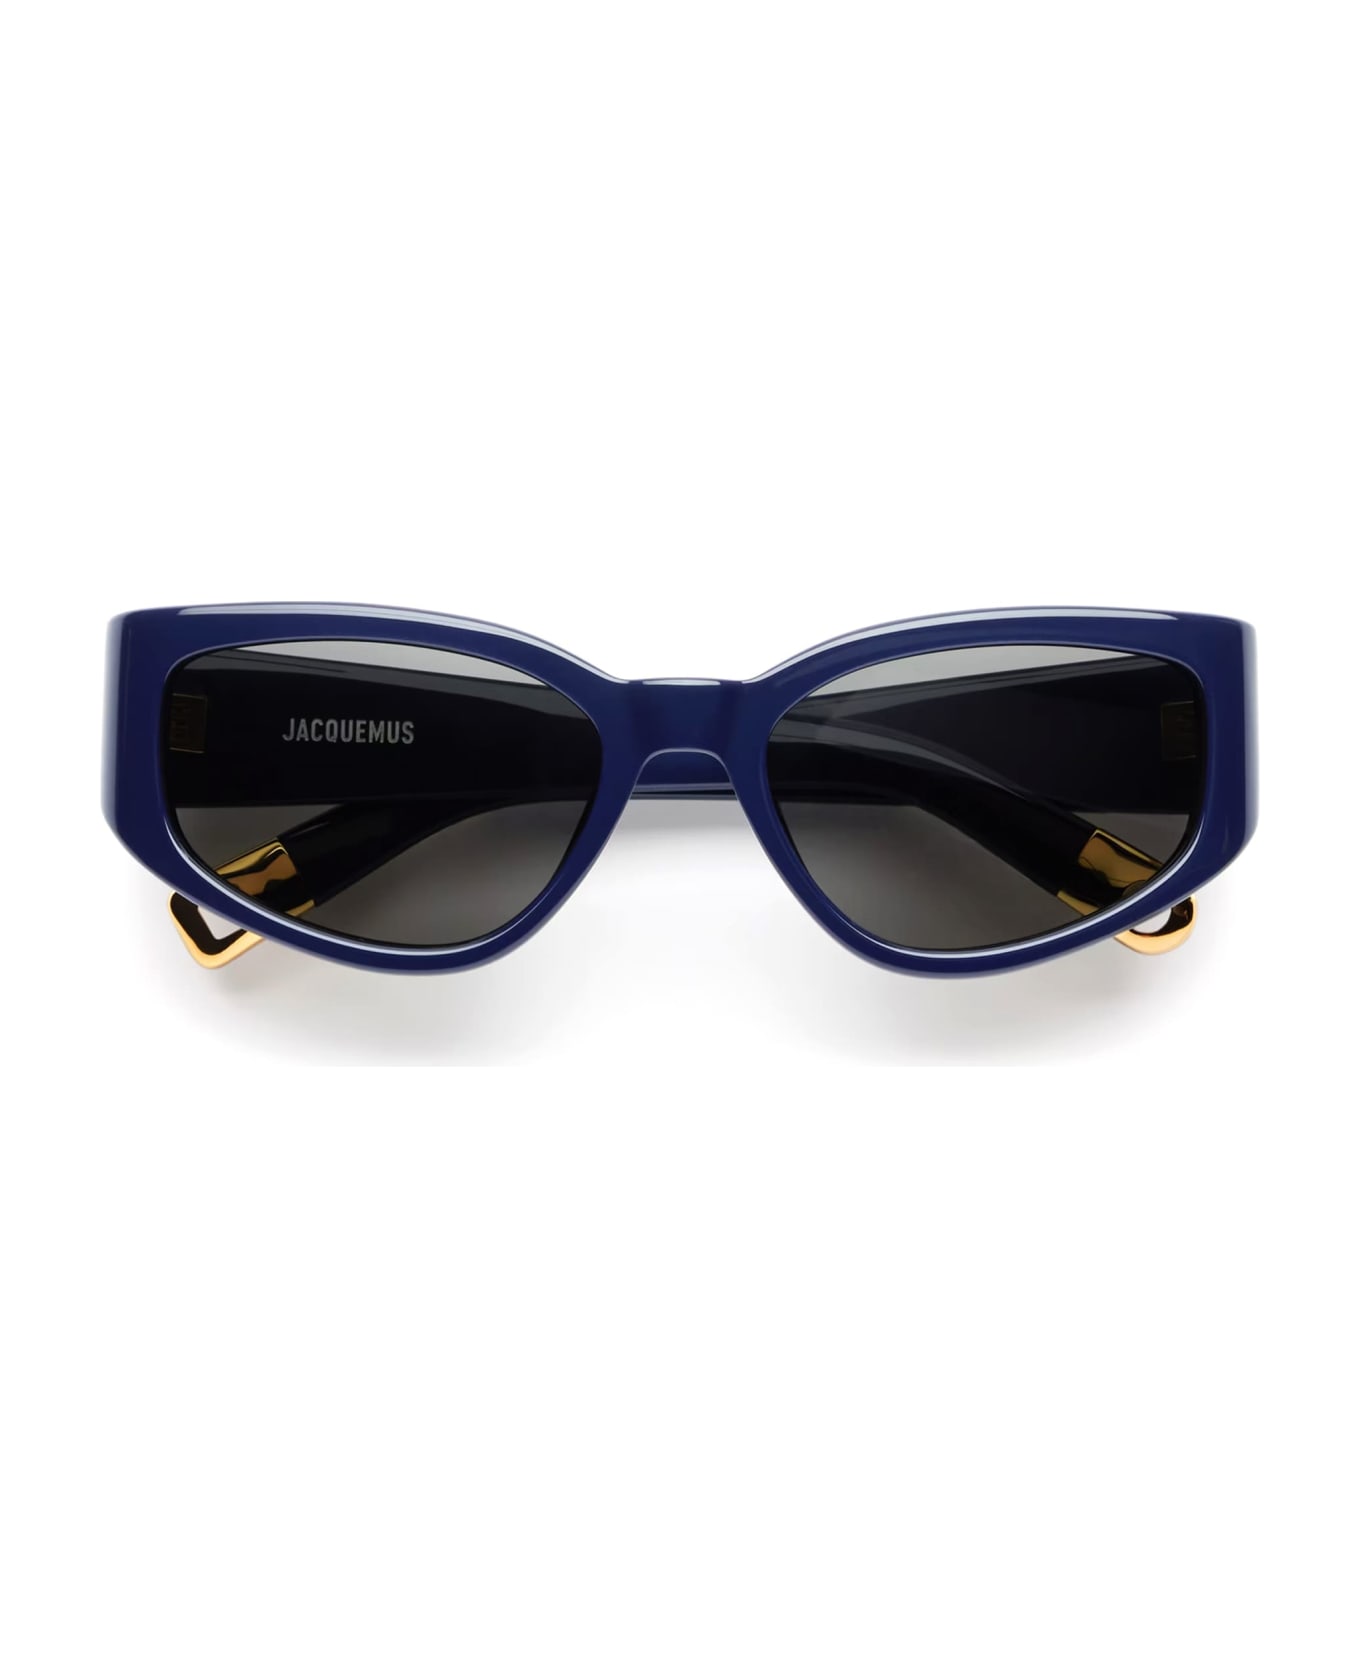 Jacquemus Gala - Navy Sunglasses - navy blue サングラス